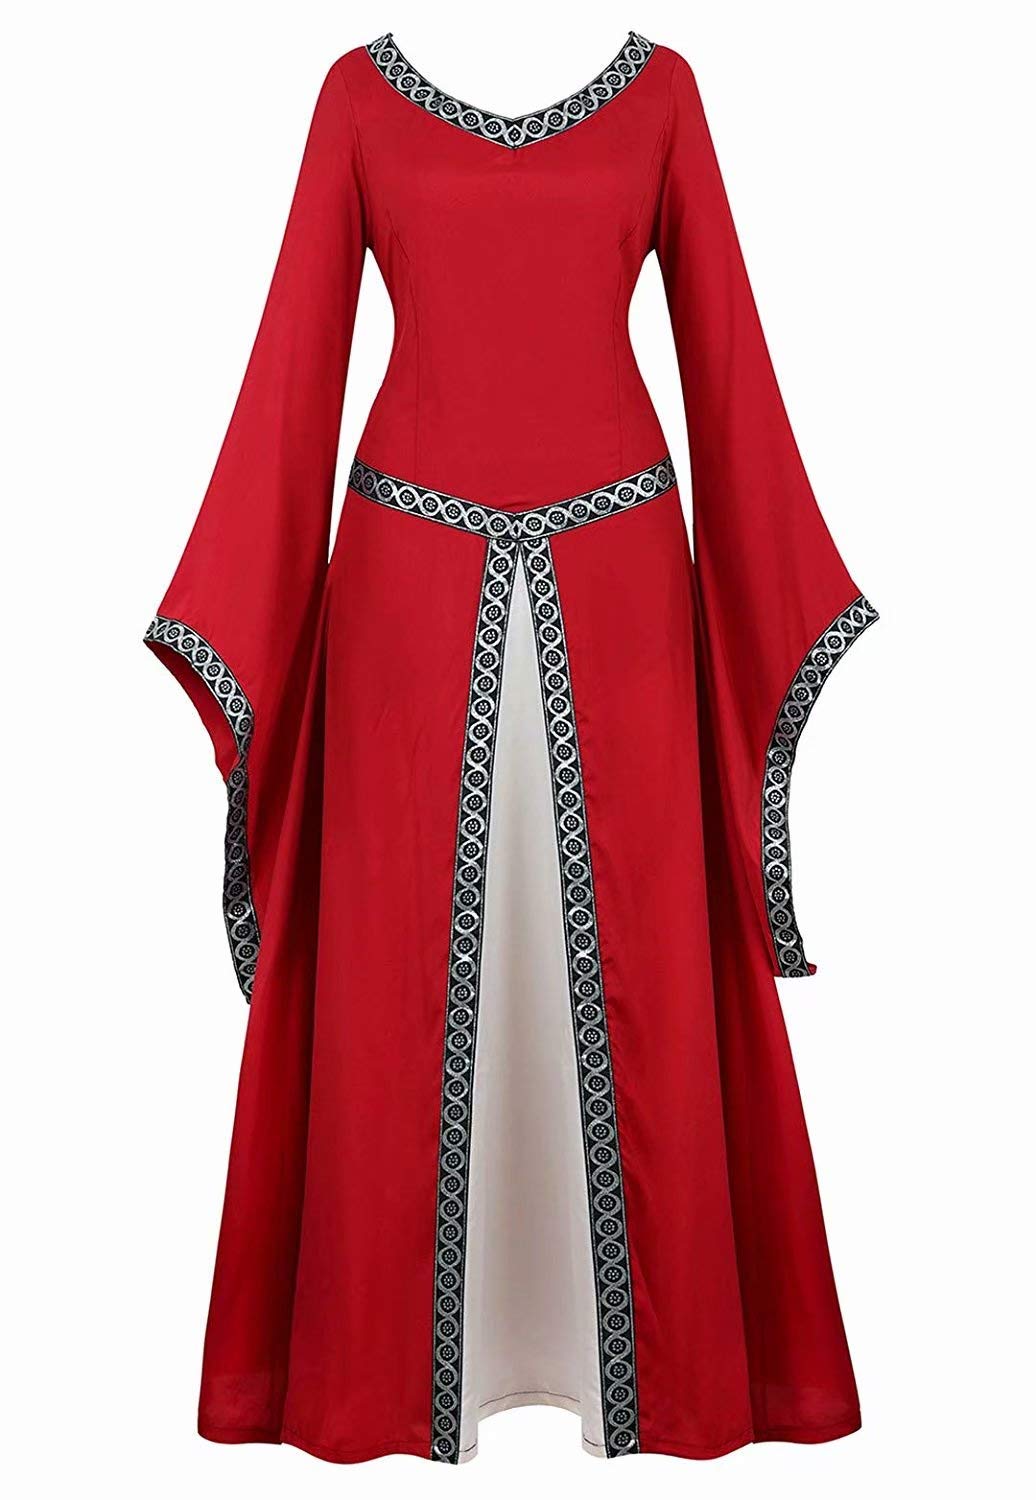 Josamogre mittelalter Kleid kleidung renaissance mit Trompetenärmel Party Kostüm bodenlang Vintage Retro costume cosplay Damen Rot XL